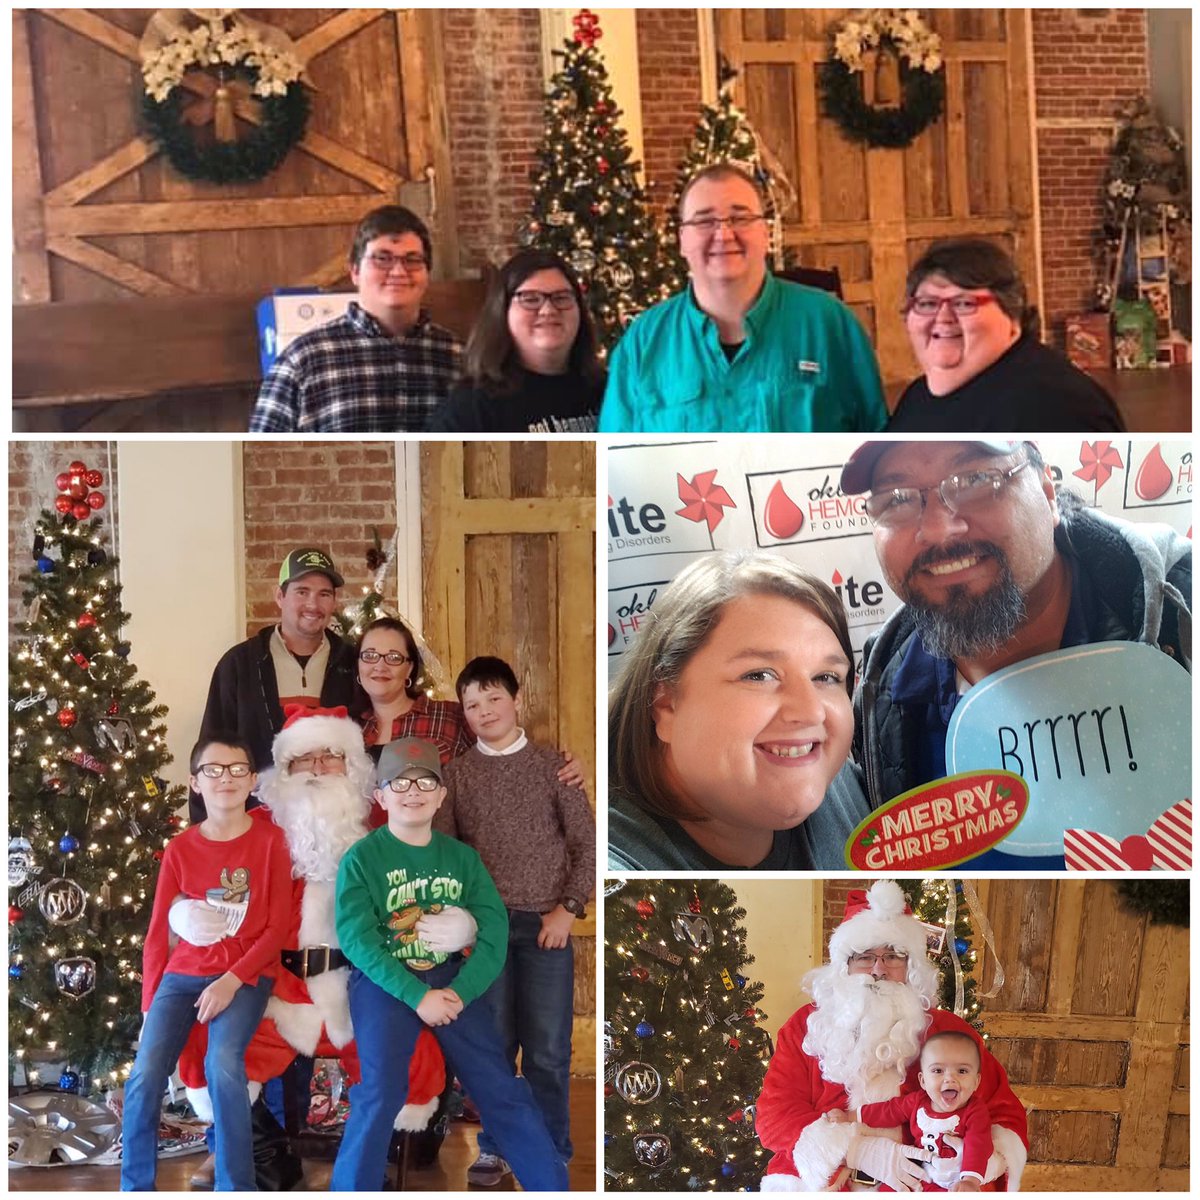 ❄️ Photos from our Winter Event. 🎄🎁🎅 #winter #Christmas #holiday 
#OklahomaHemophiliaFoundation
#BleedingDisorders
#Hemophilia
#VonWillebrands 
#FactorDeficiency
#ITP
#Oklahoma 
#OKHemophilia